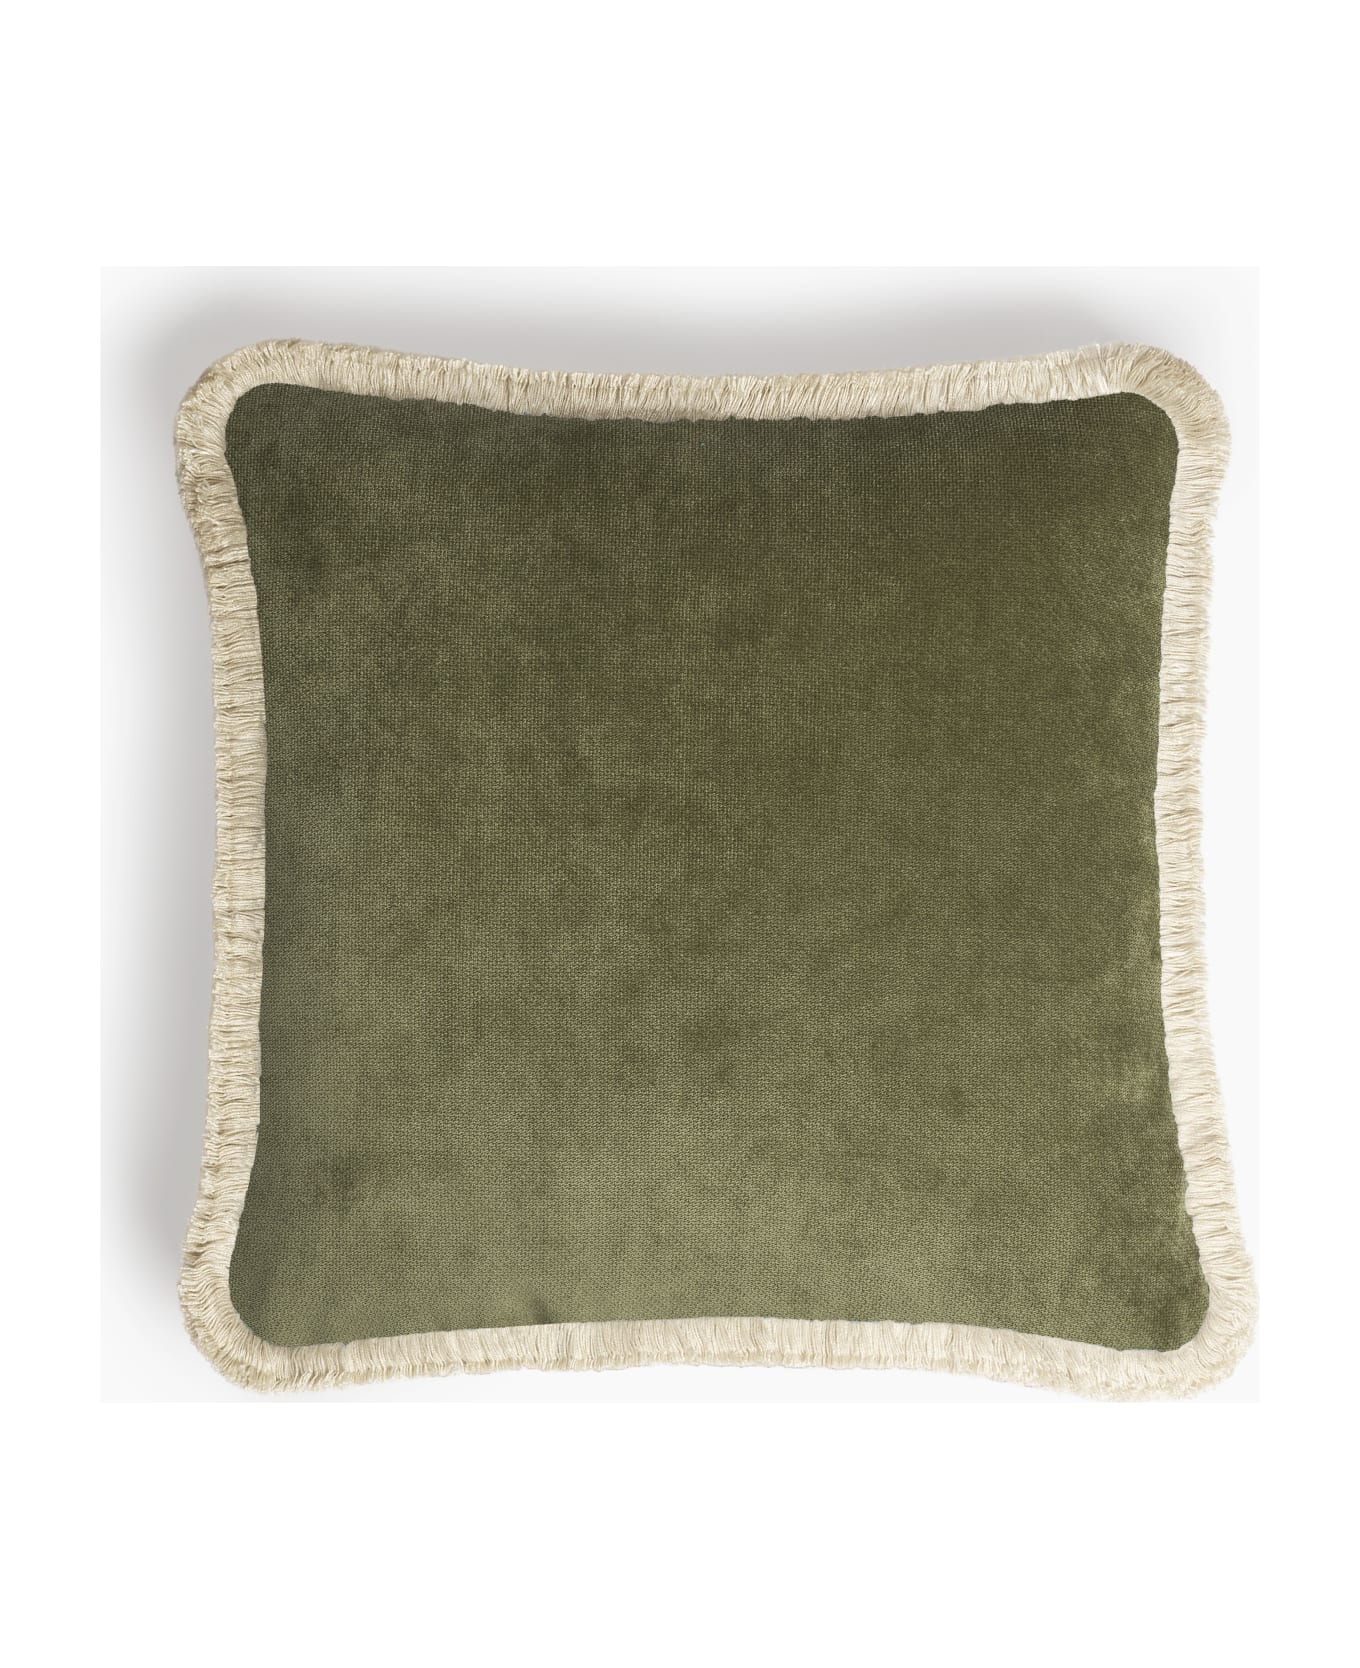 Lo Decor Happy Pillow  Olive Green Velvet Dirty White Fringes - Olive green with dirty white fringes